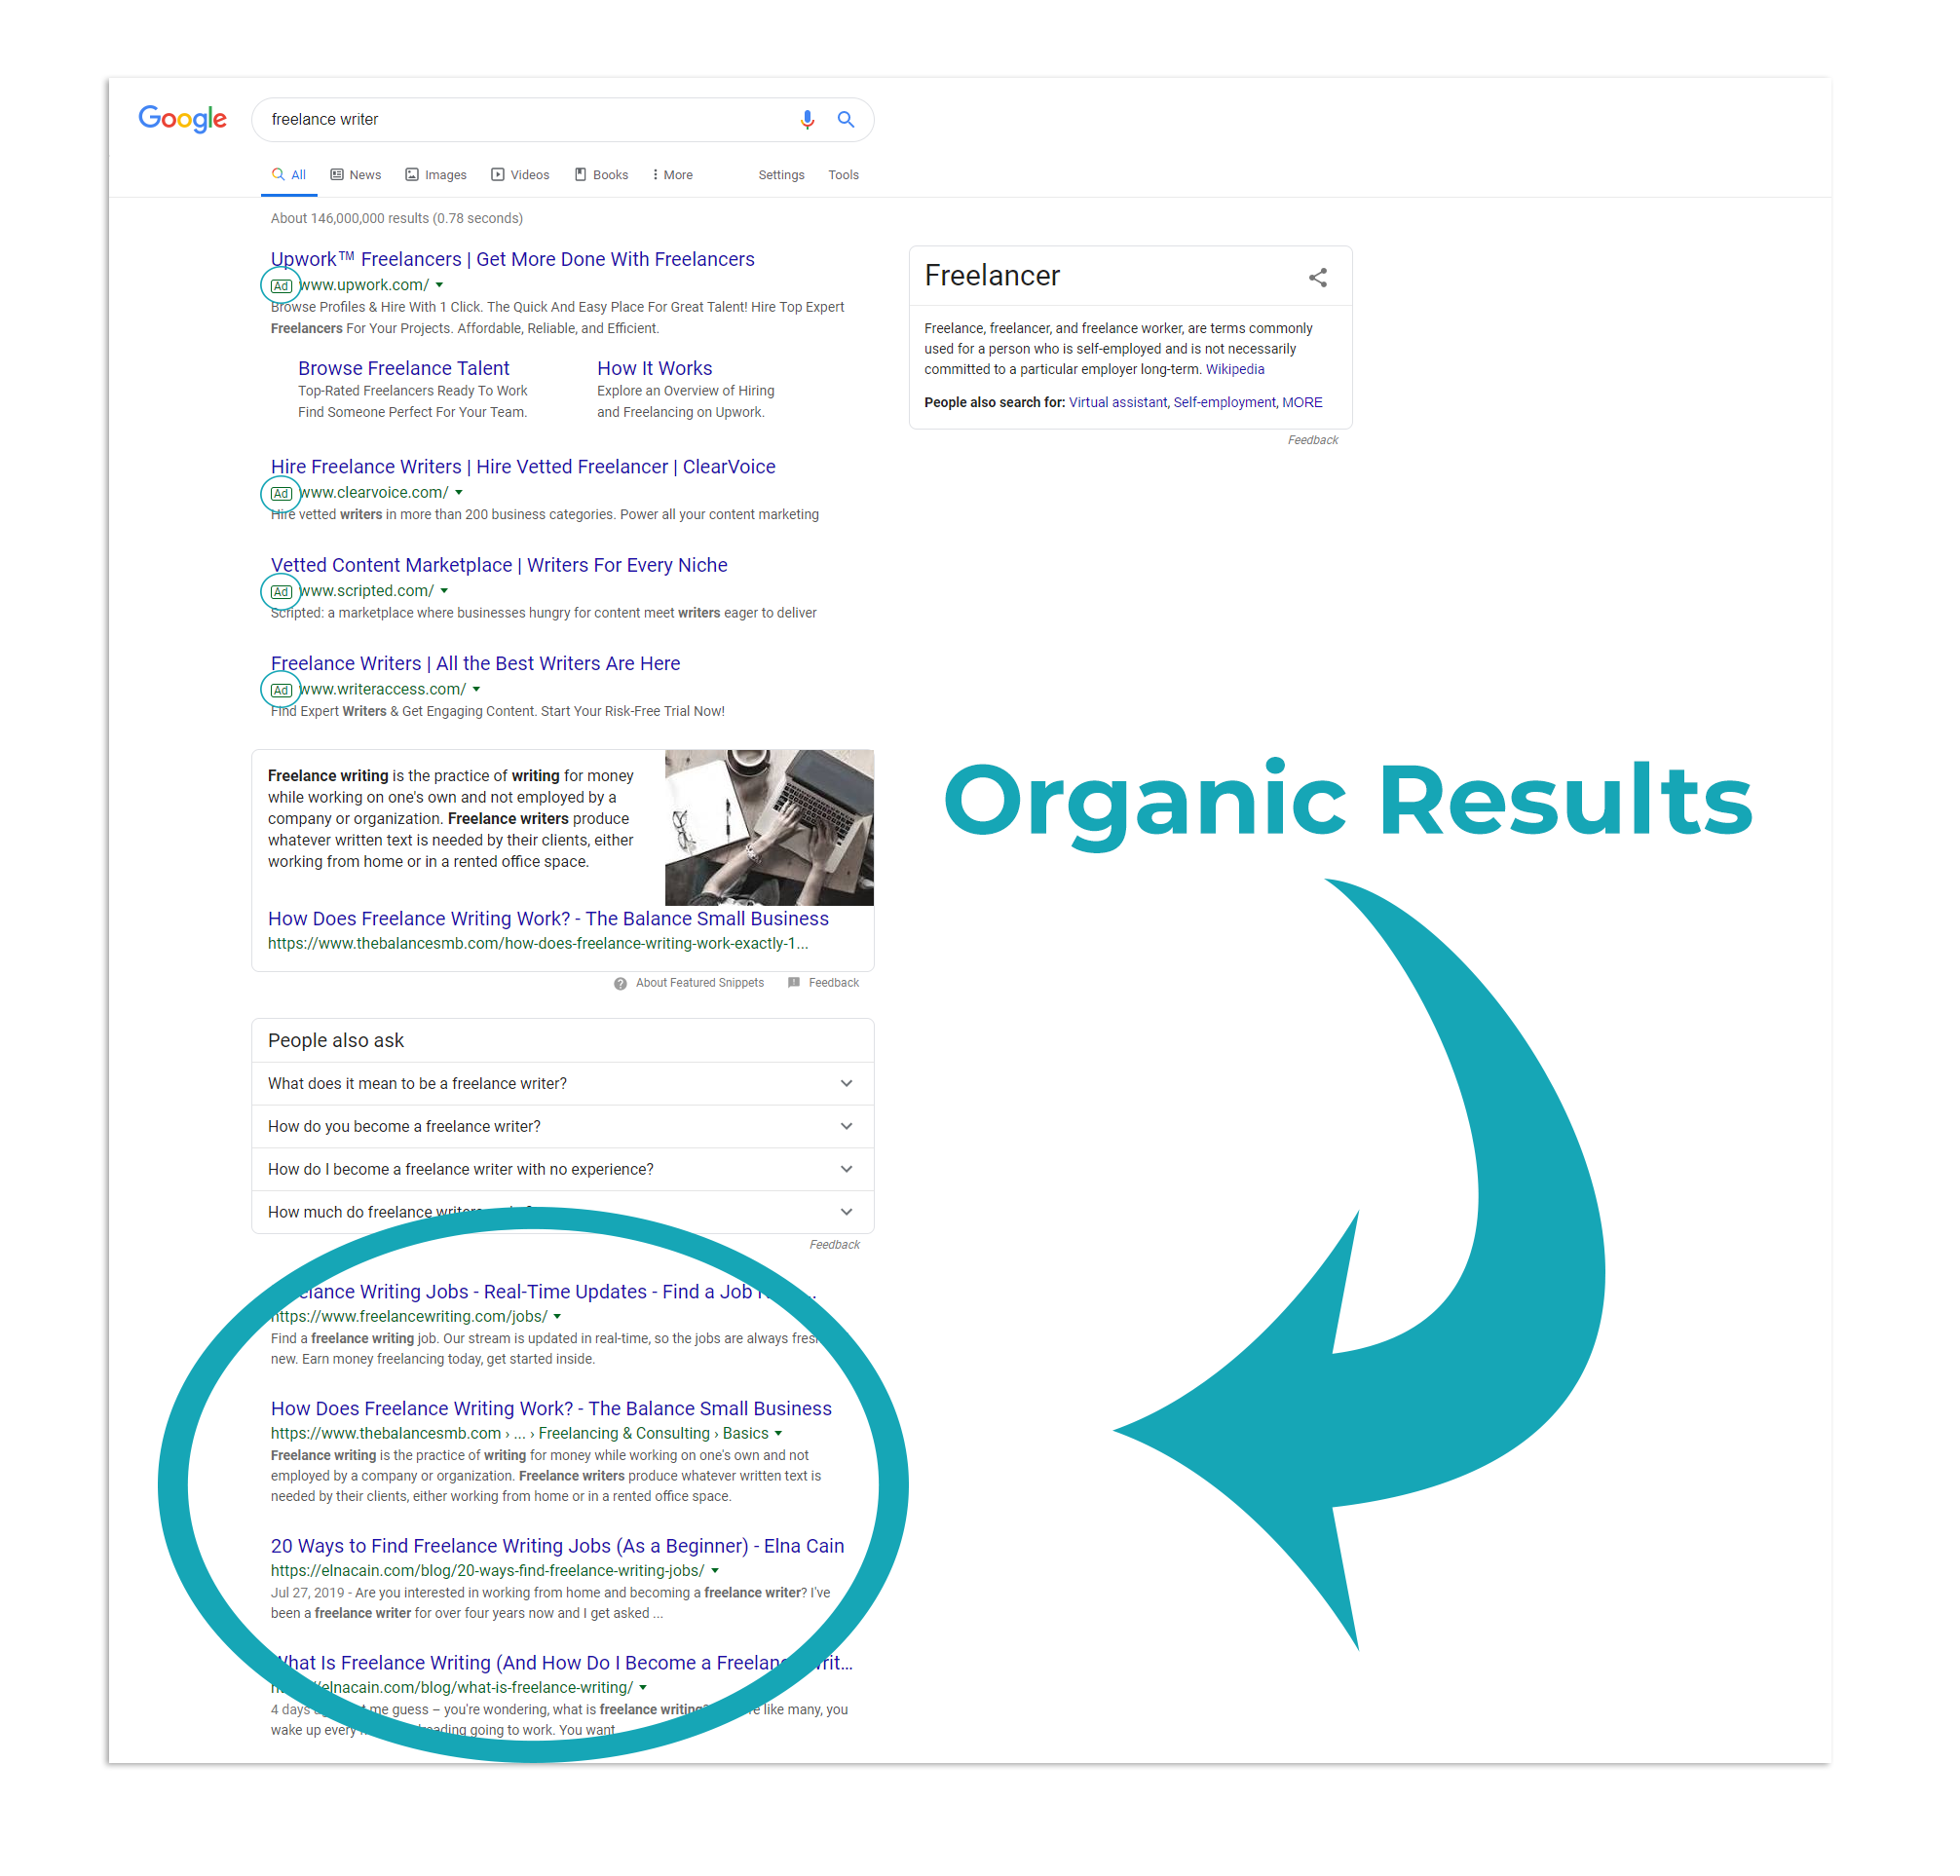 Organic results vs ads